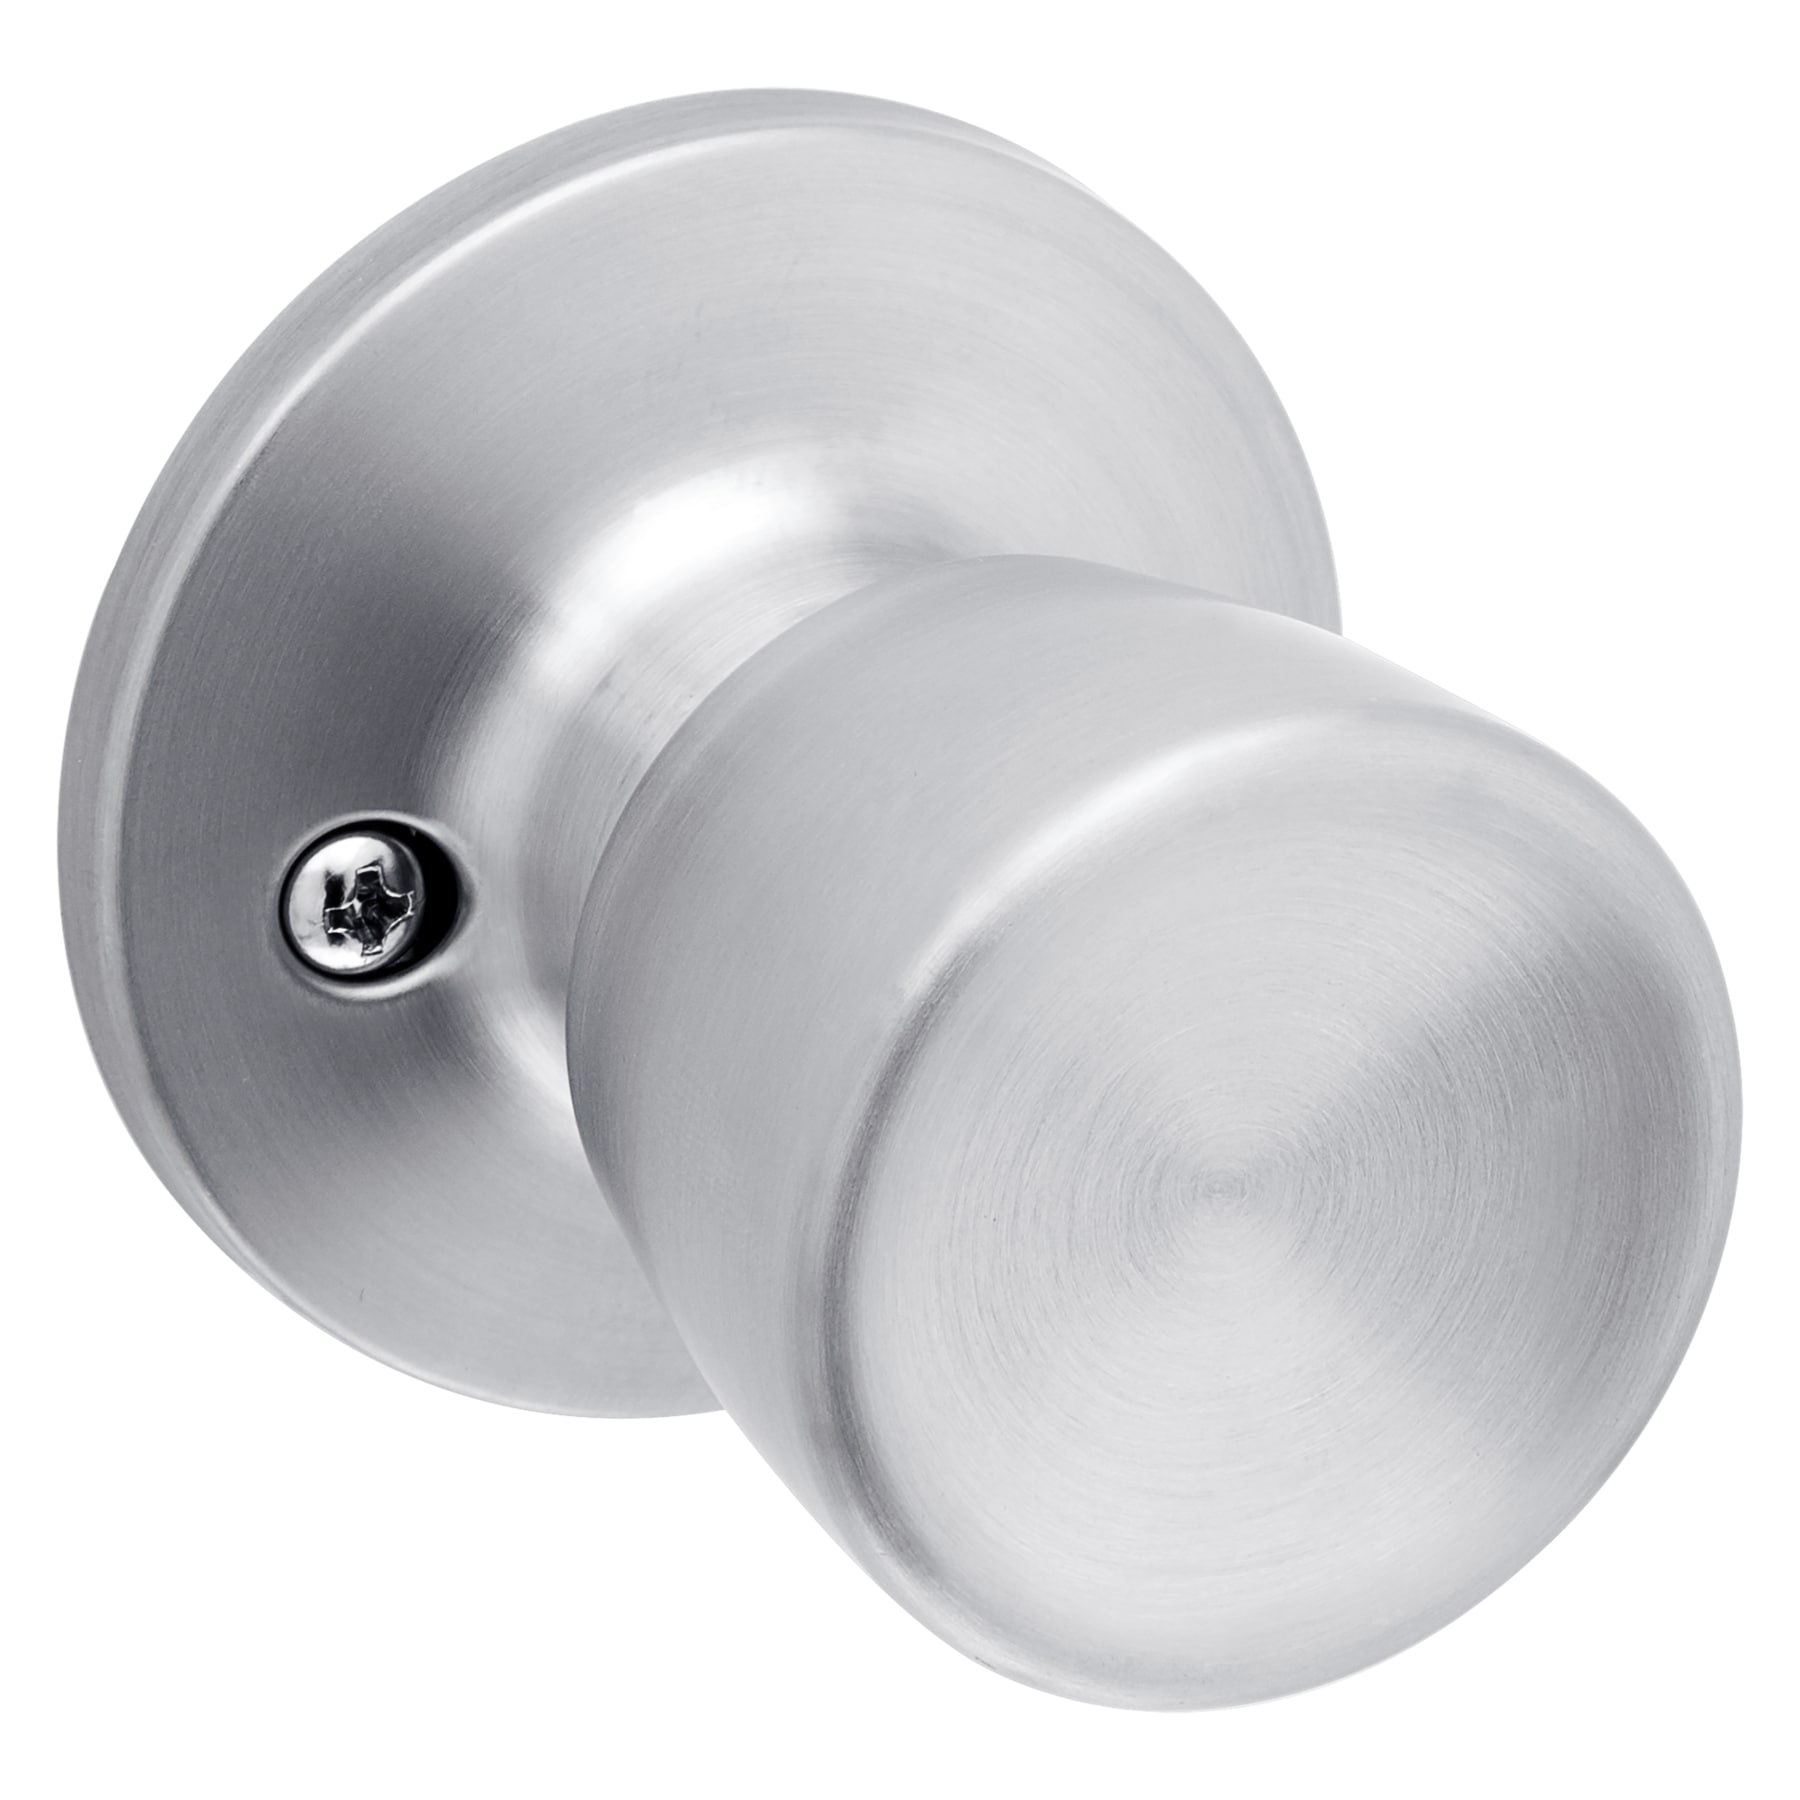 Mobile Home Door knob Lock/Privacy Model Interior Door knobs keyless for  Bedroom and Bathroom/Stainless Steel. Door Thickness:1-3/16 to 1-3/4,  Latch fit 2-3/8 Backset 